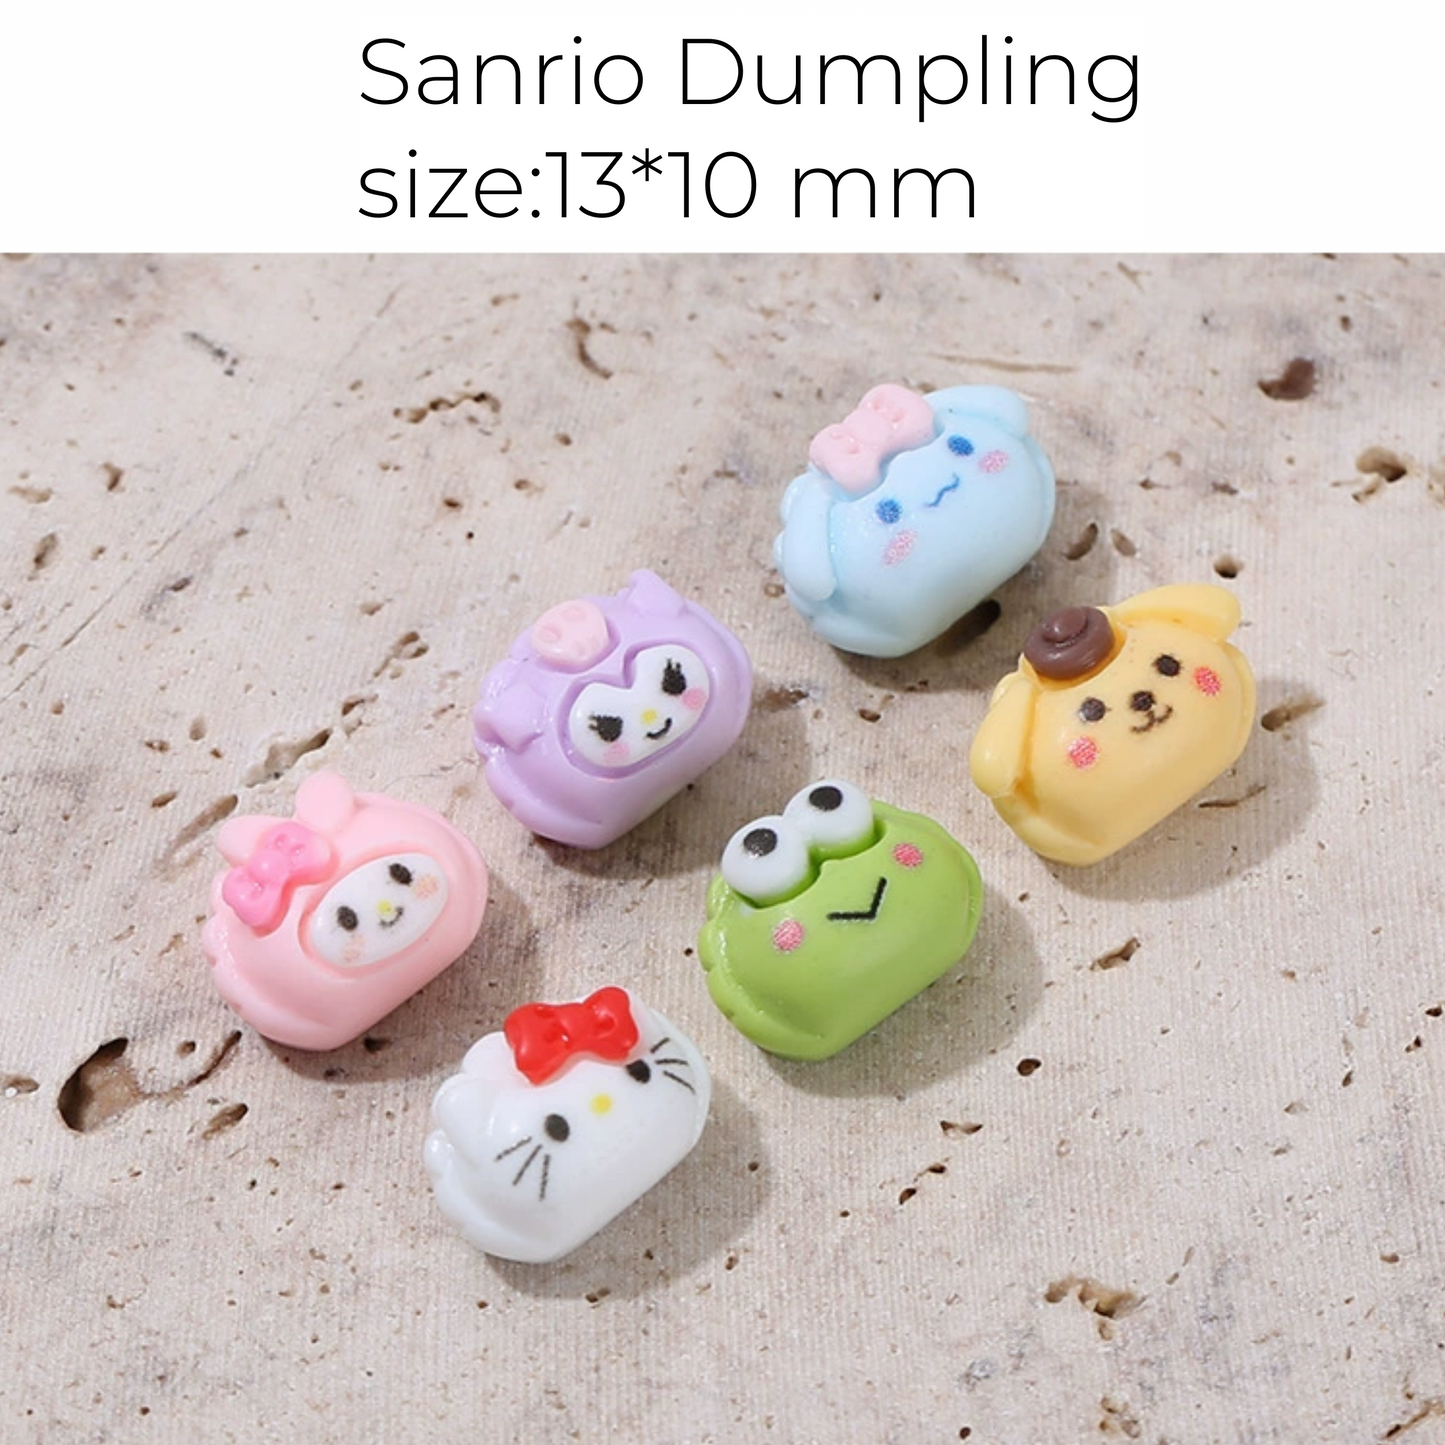 Sanrio Dumpling set